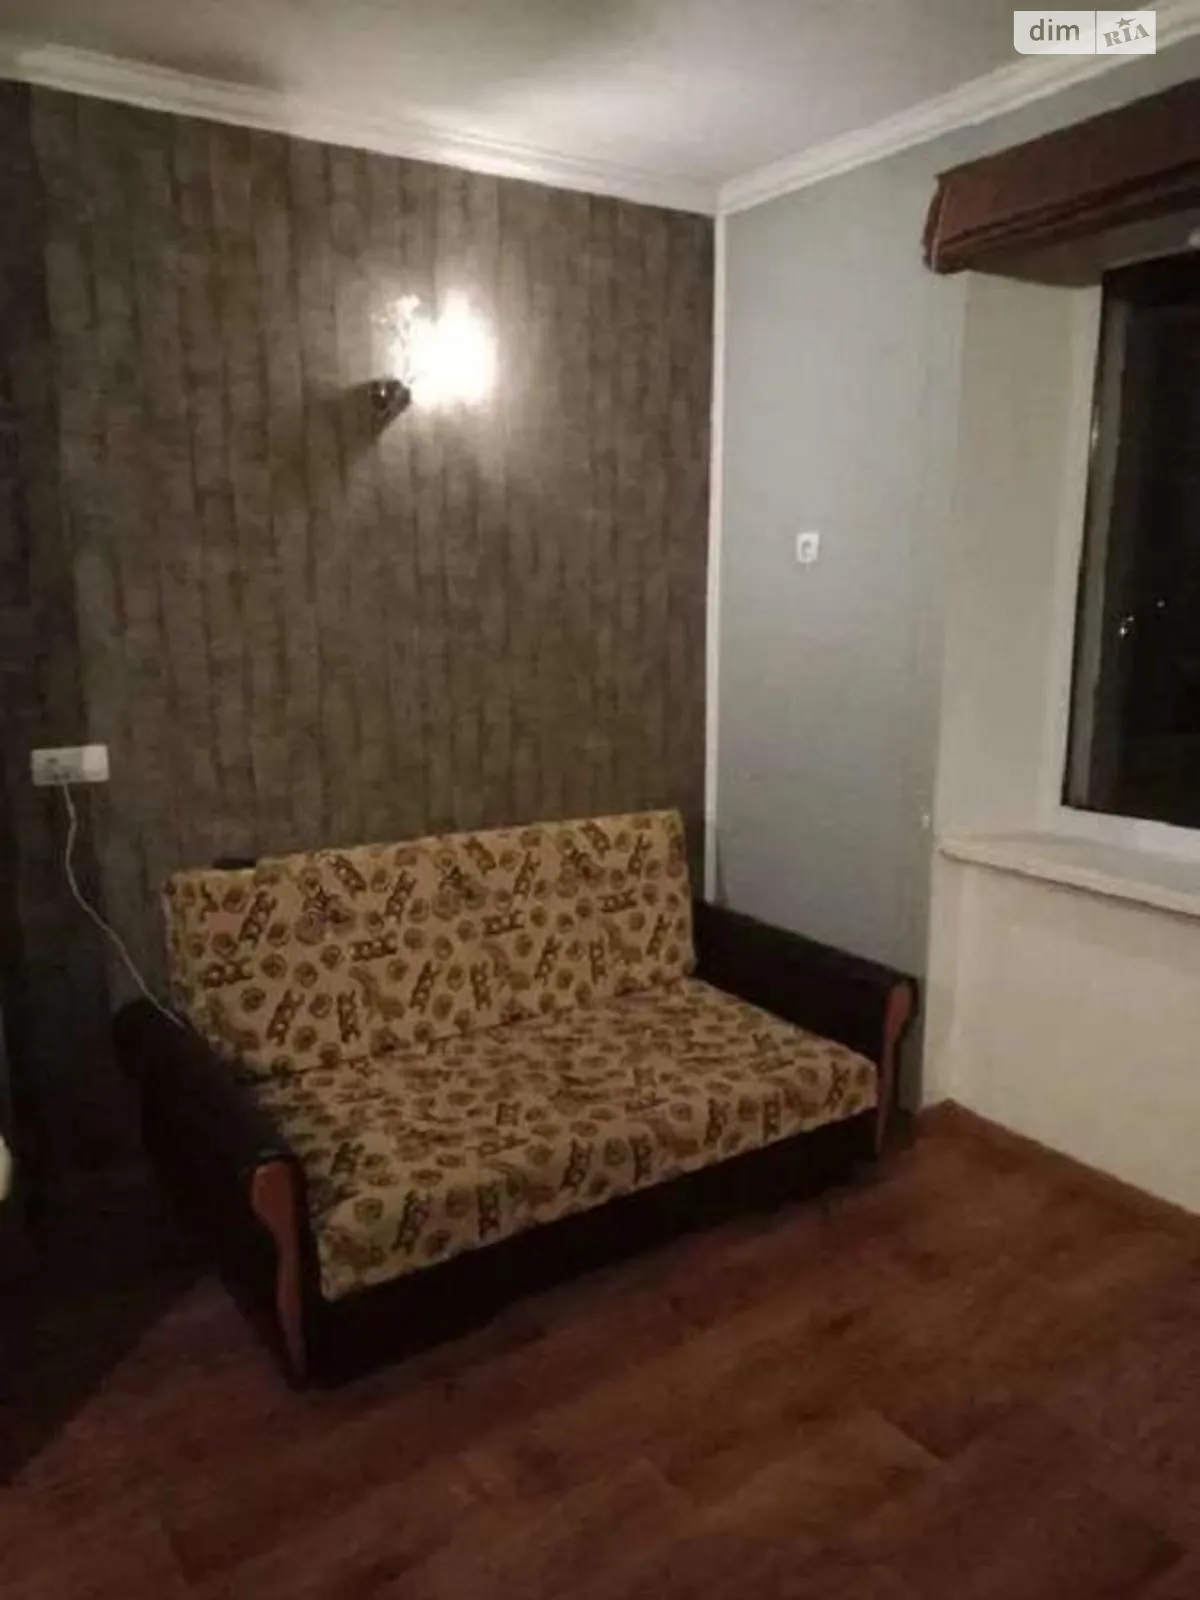 Продается комната 25 кв. м в Одессе, цена: 7200 $ - фото 1